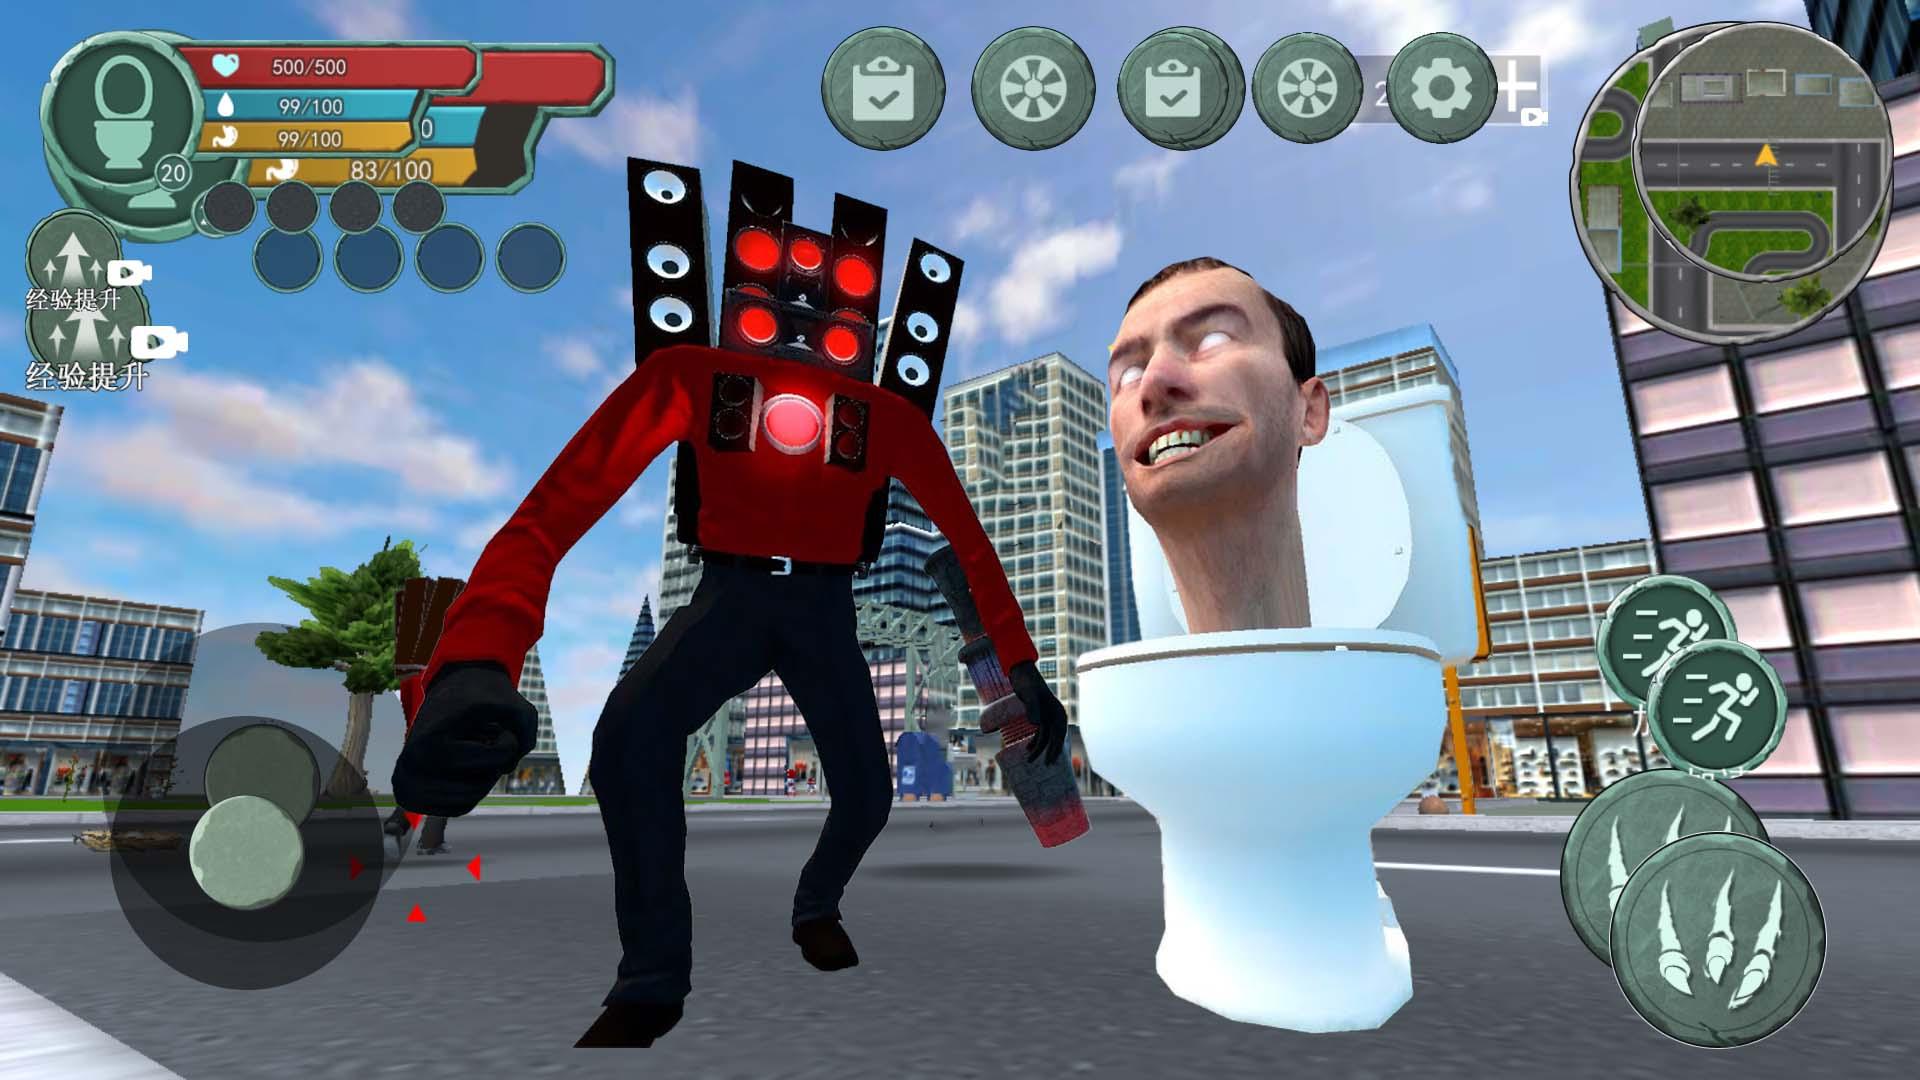 Игру туалет монстр